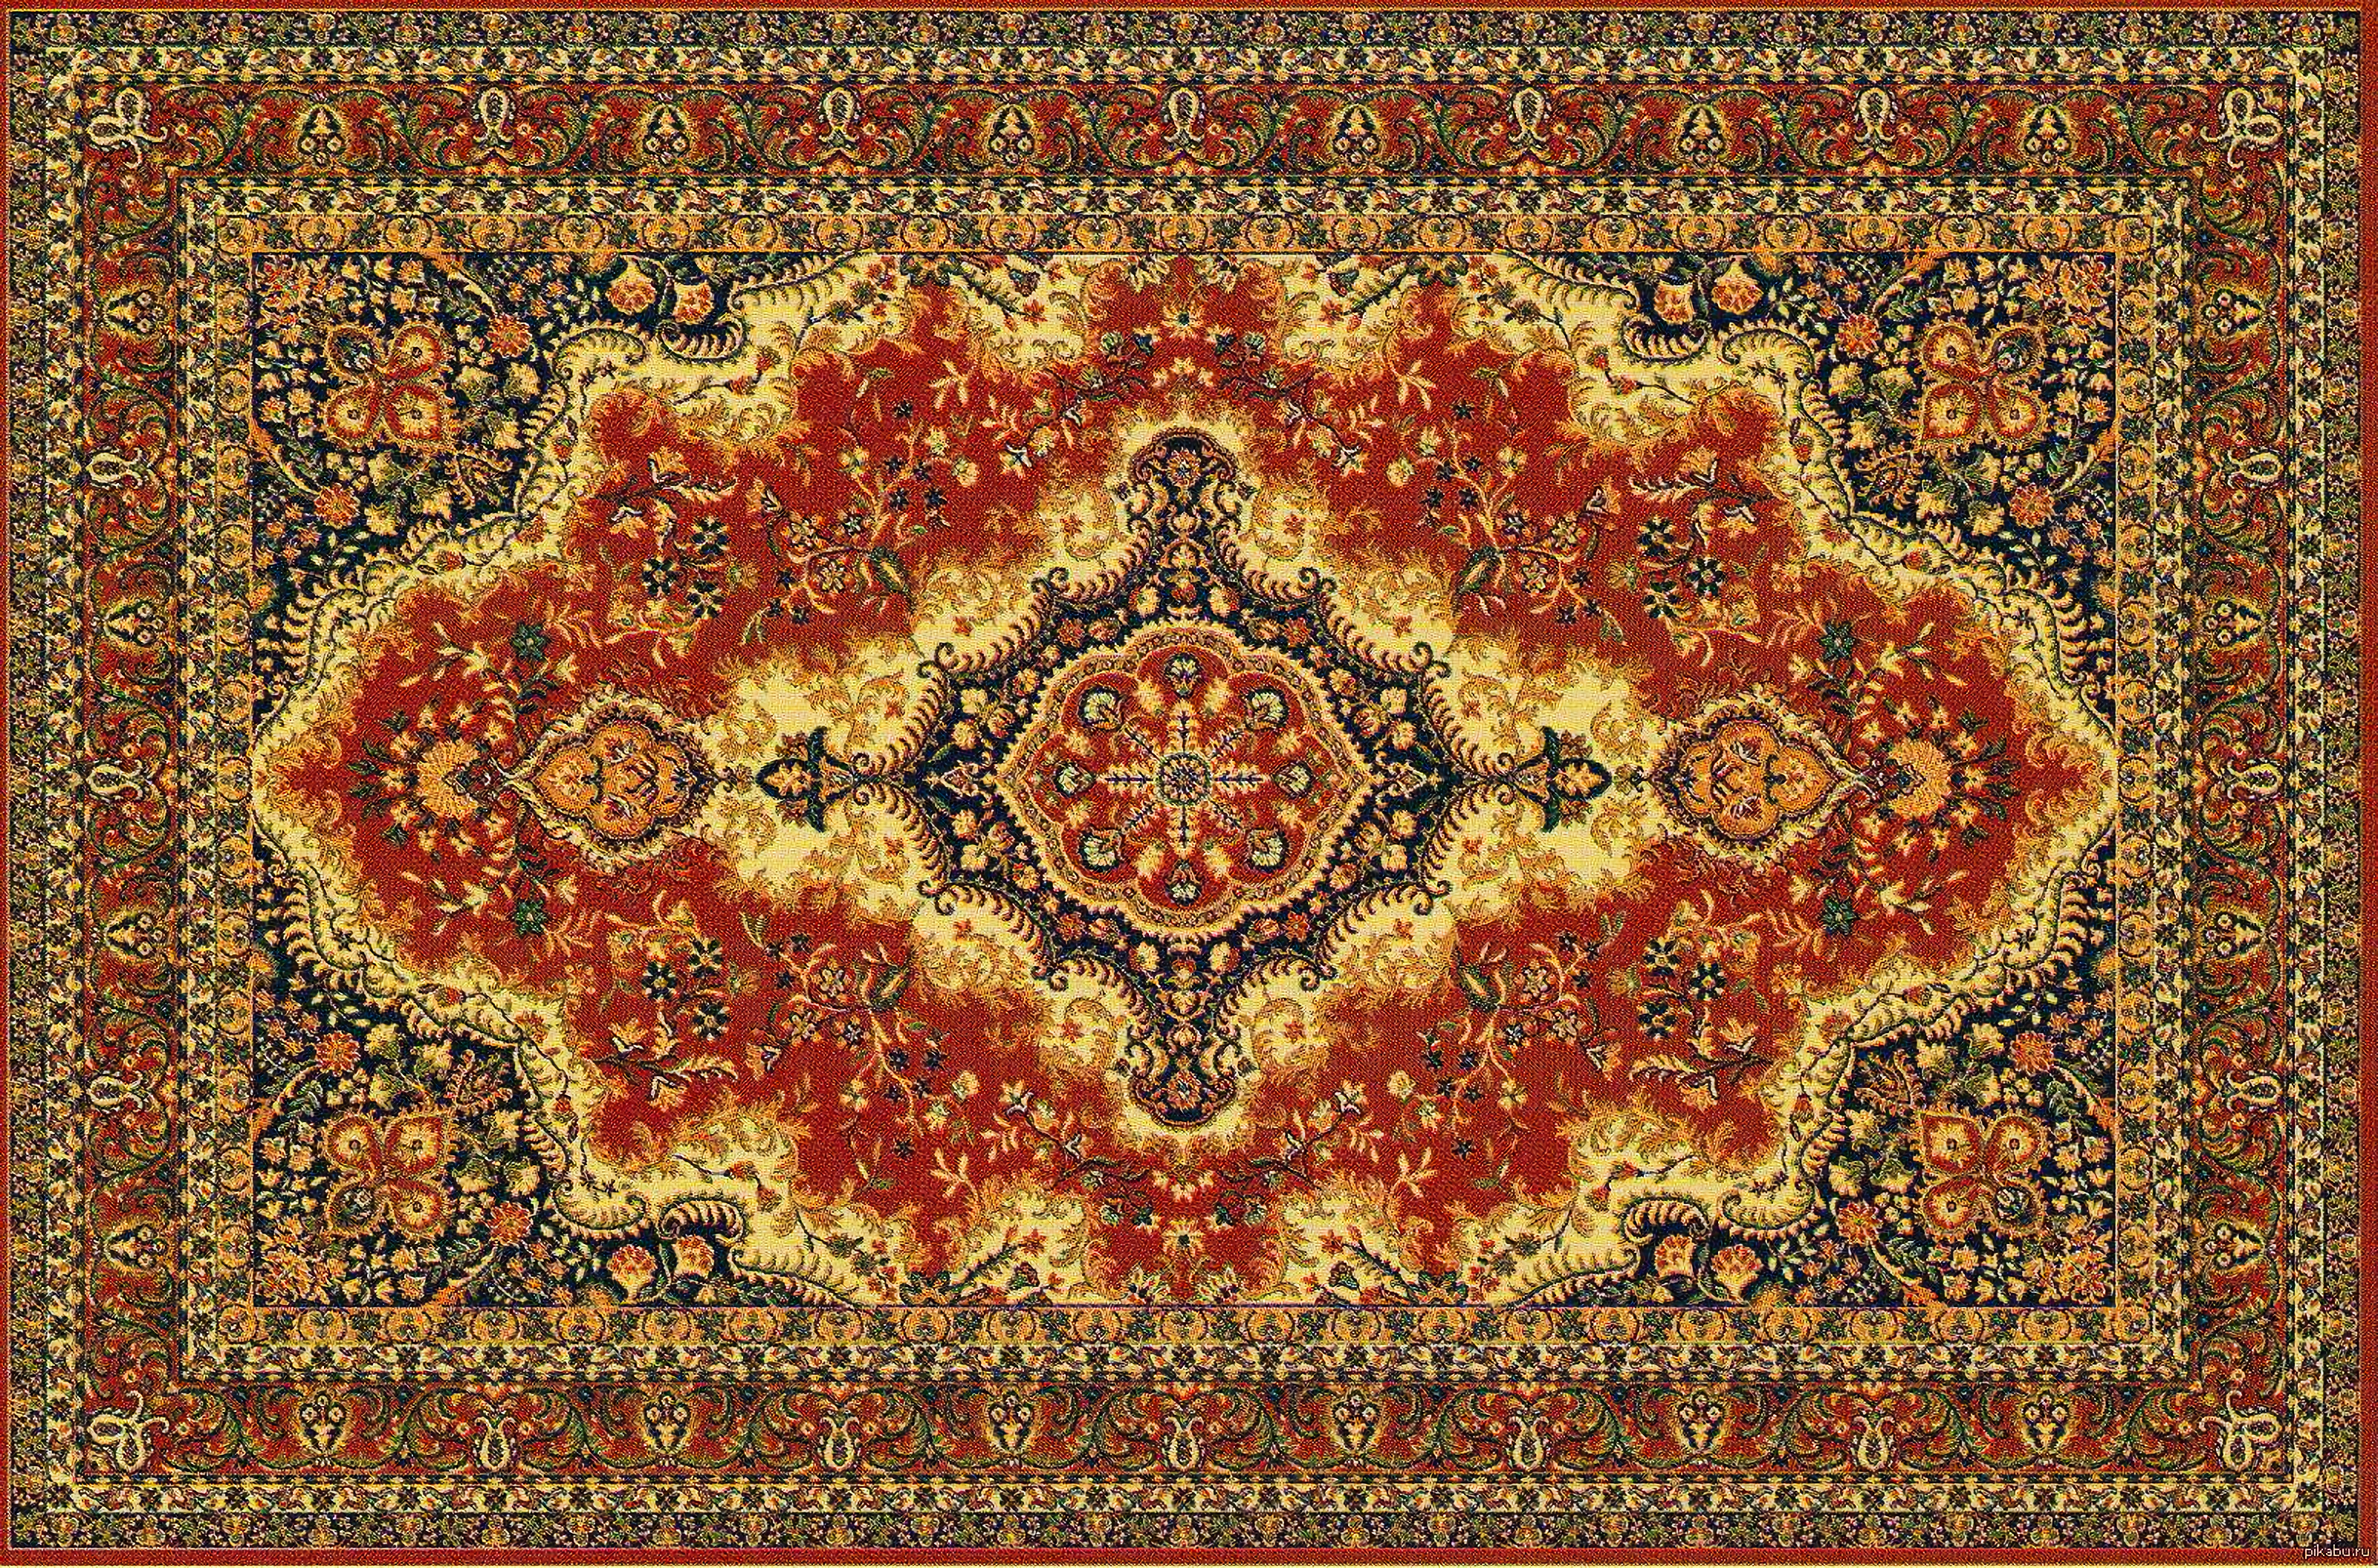 General 3200x2110 carpet Persia texture watermarked digital art